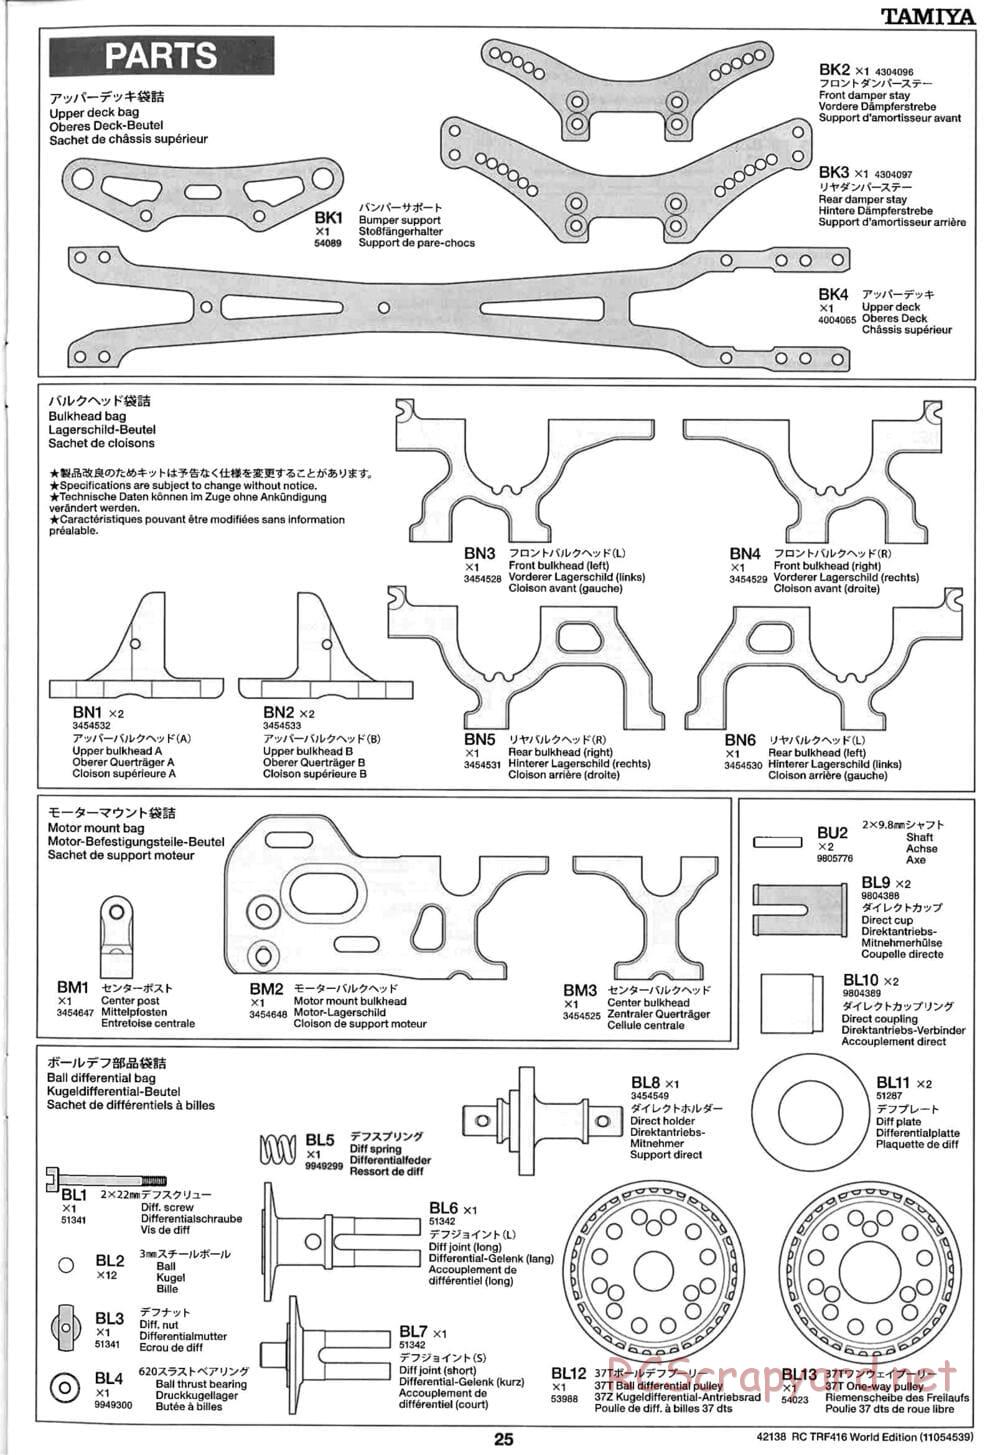 Tamiya - TRF416 World Edition Chassis - Manual - Page 25